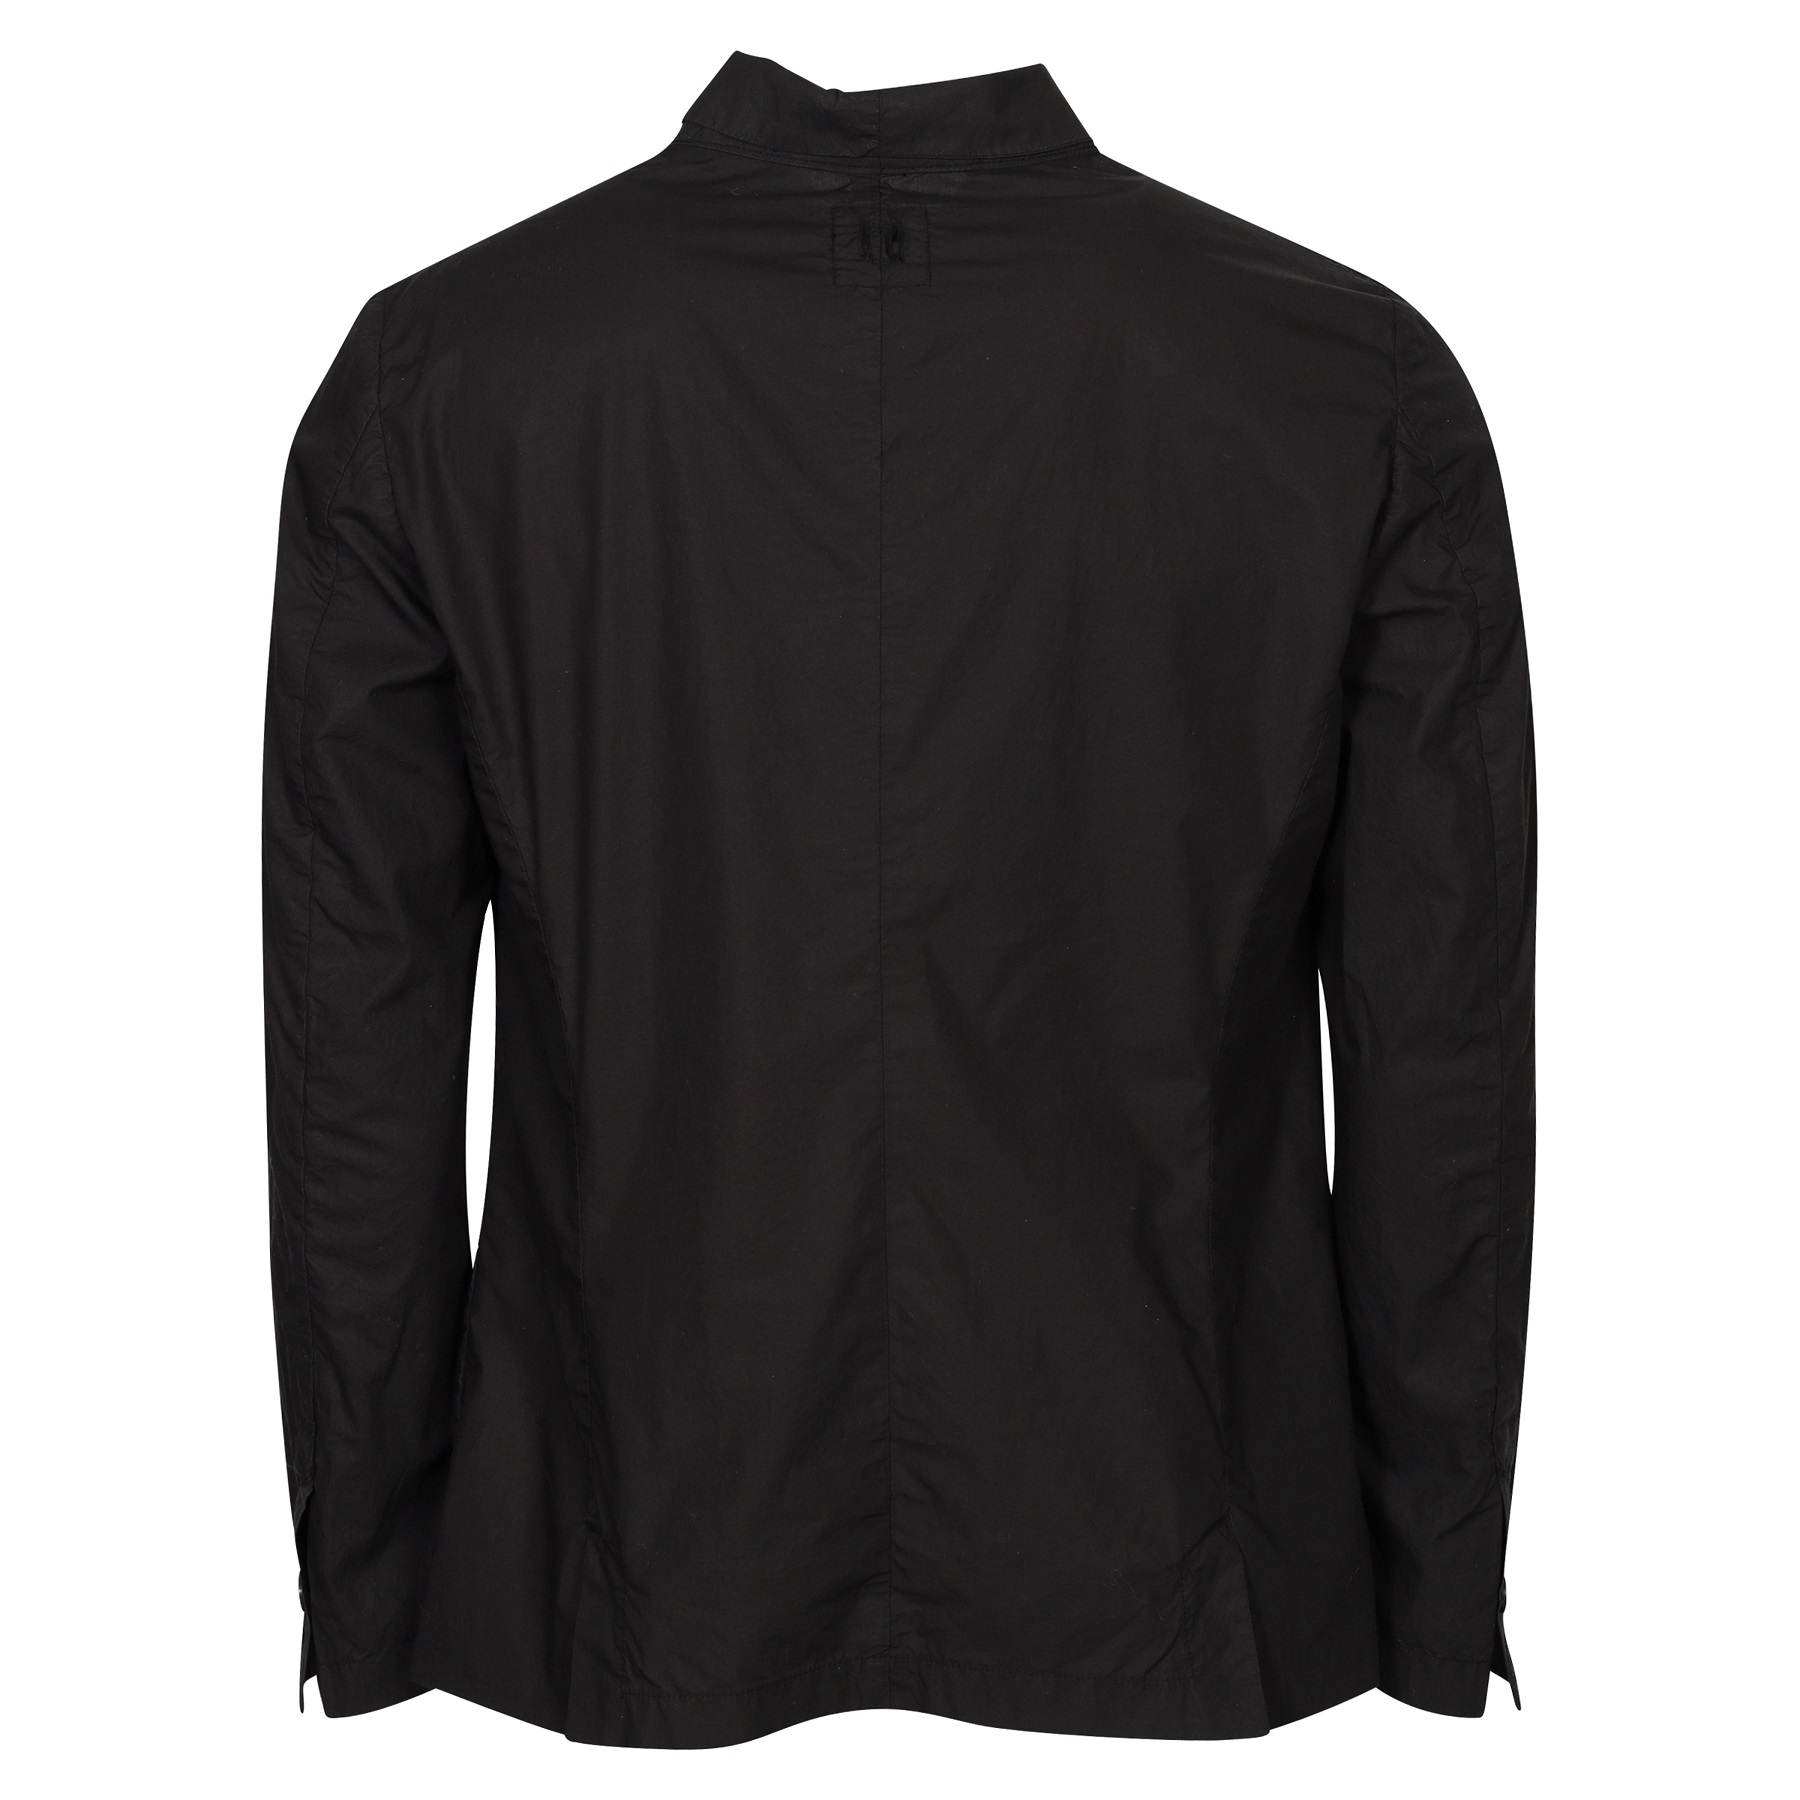 HANNES ROETHER Jacket in Black